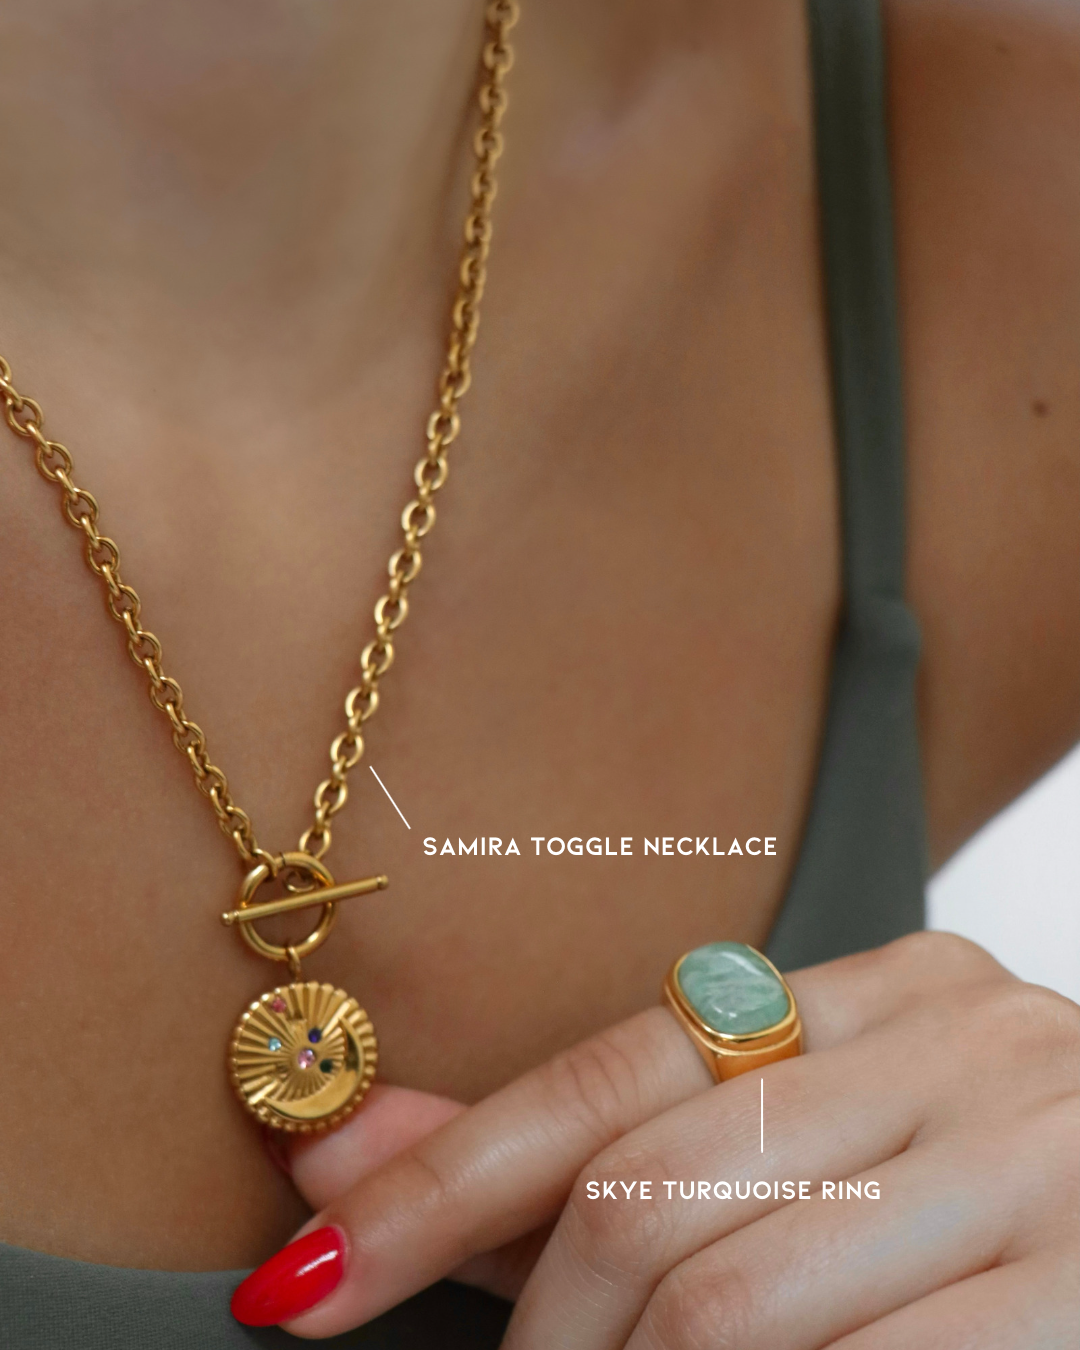 The Samira Toggle Necklace